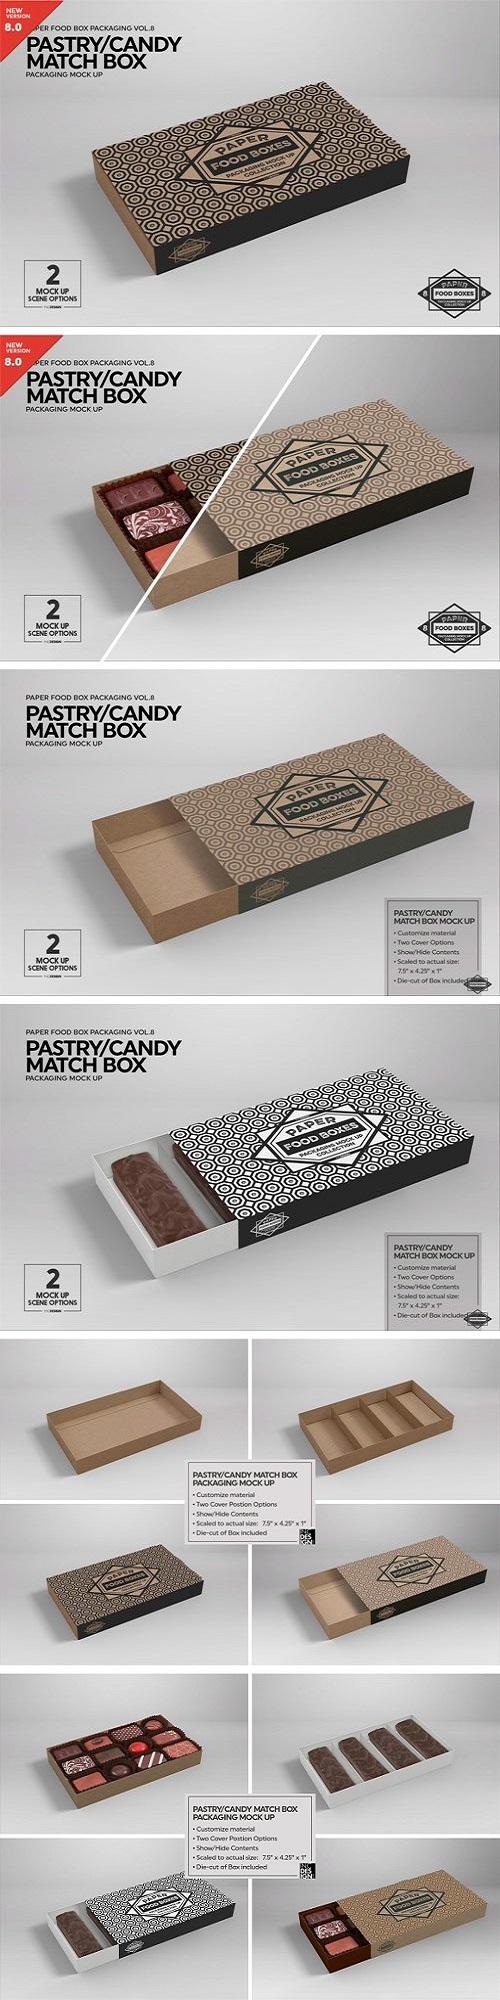 Match Box Style Packaging MockUp 2181811